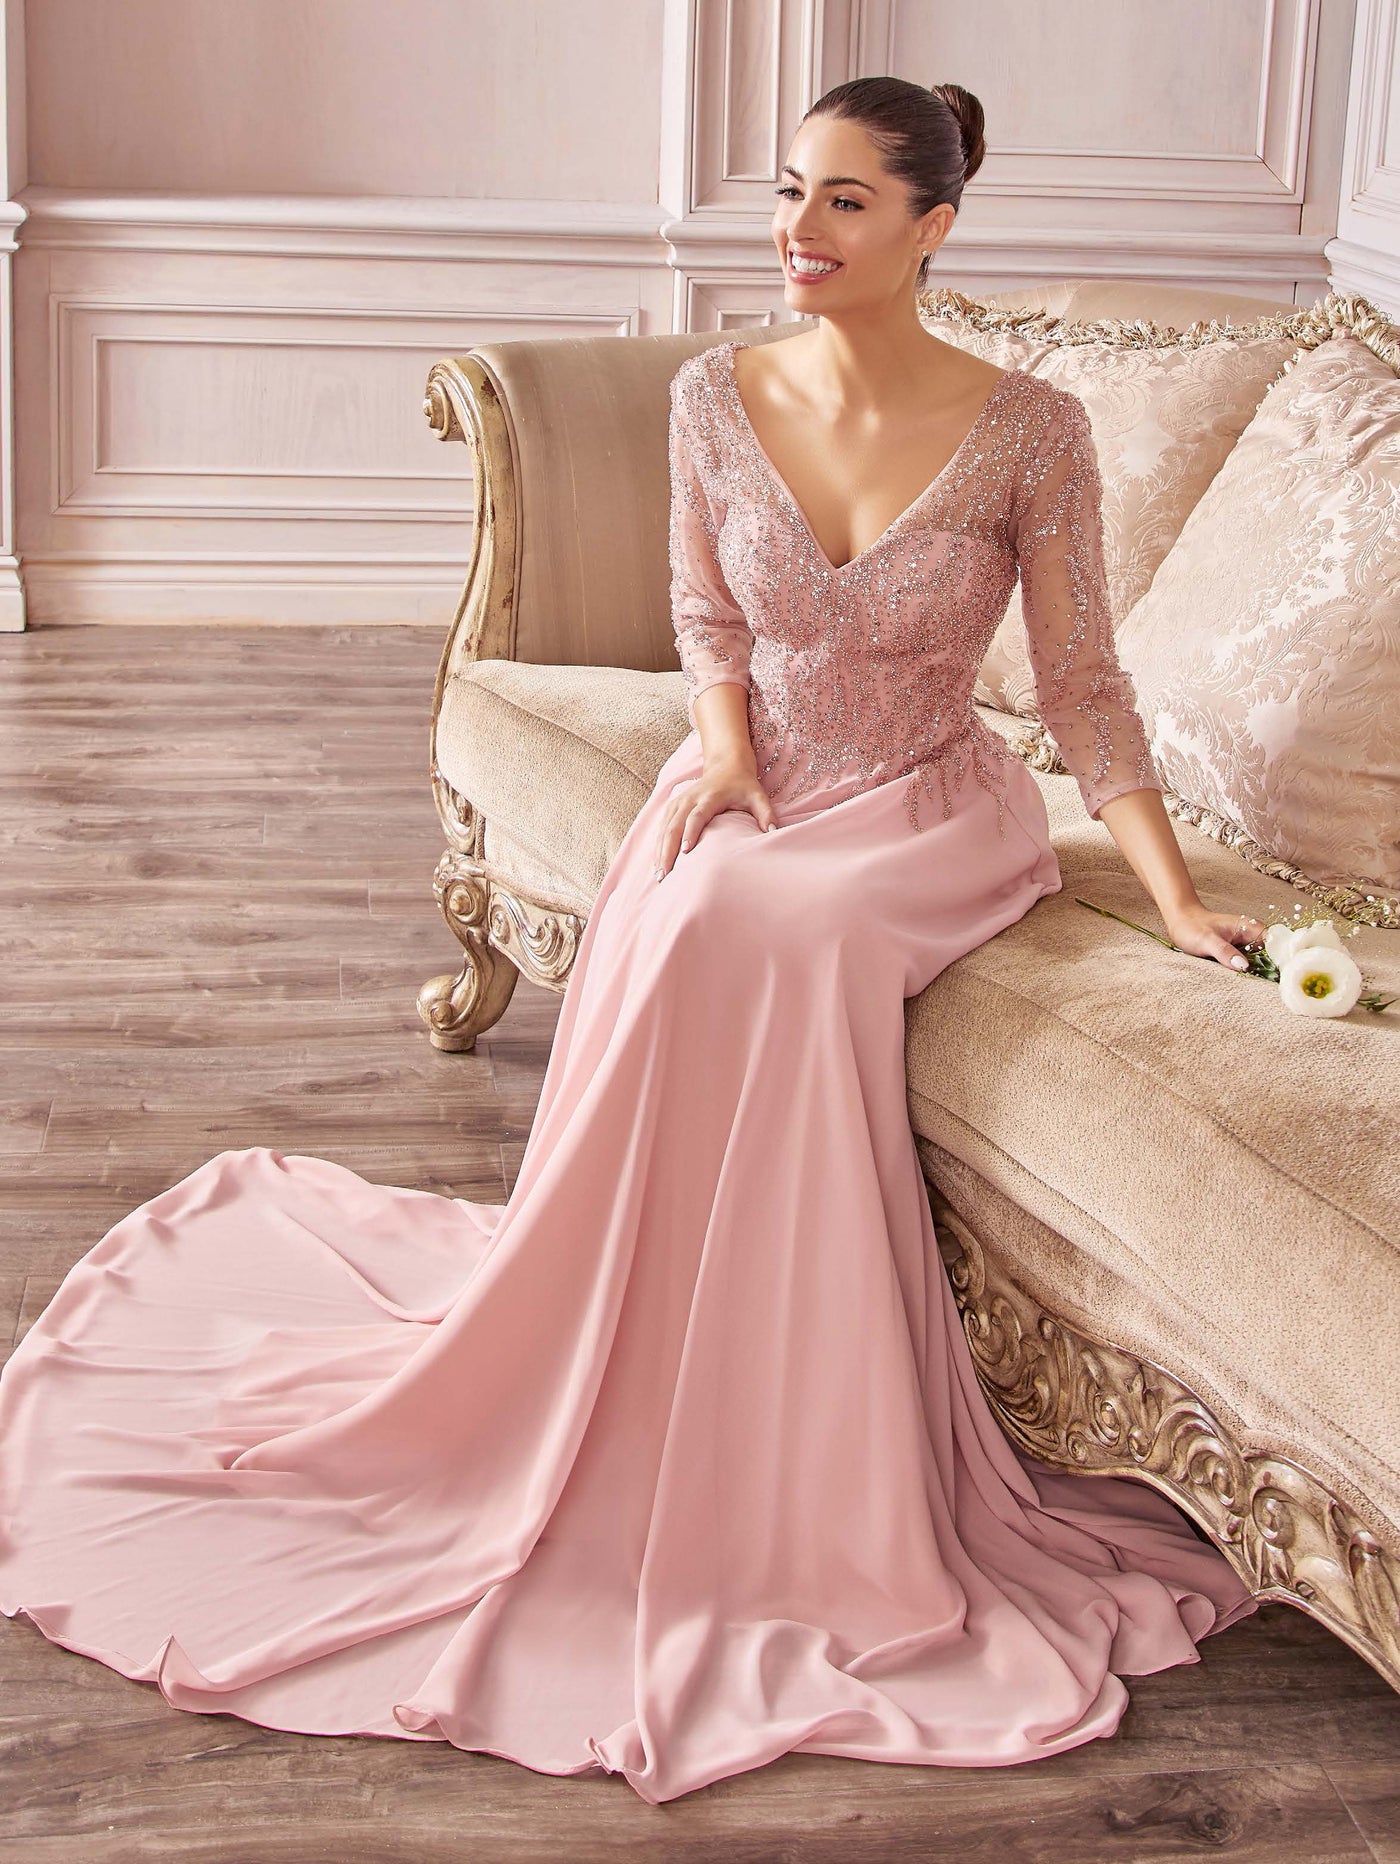 Cinderella Divine CD0171 B Chic Fashions Long Dress Evening Gowns